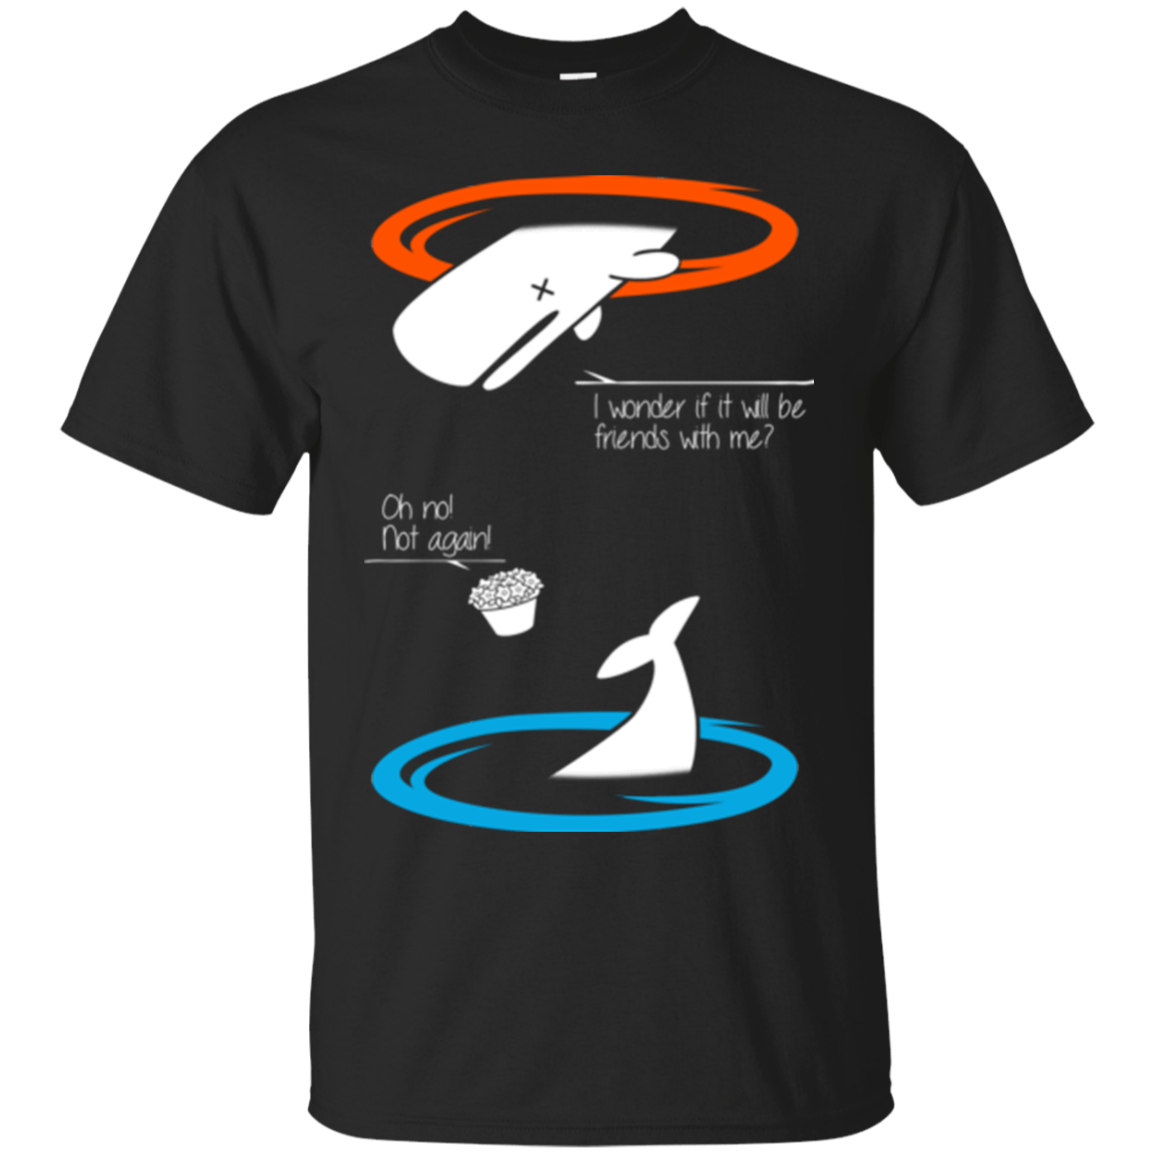 T-Shirts Black / Small Portal guide T-Shirt